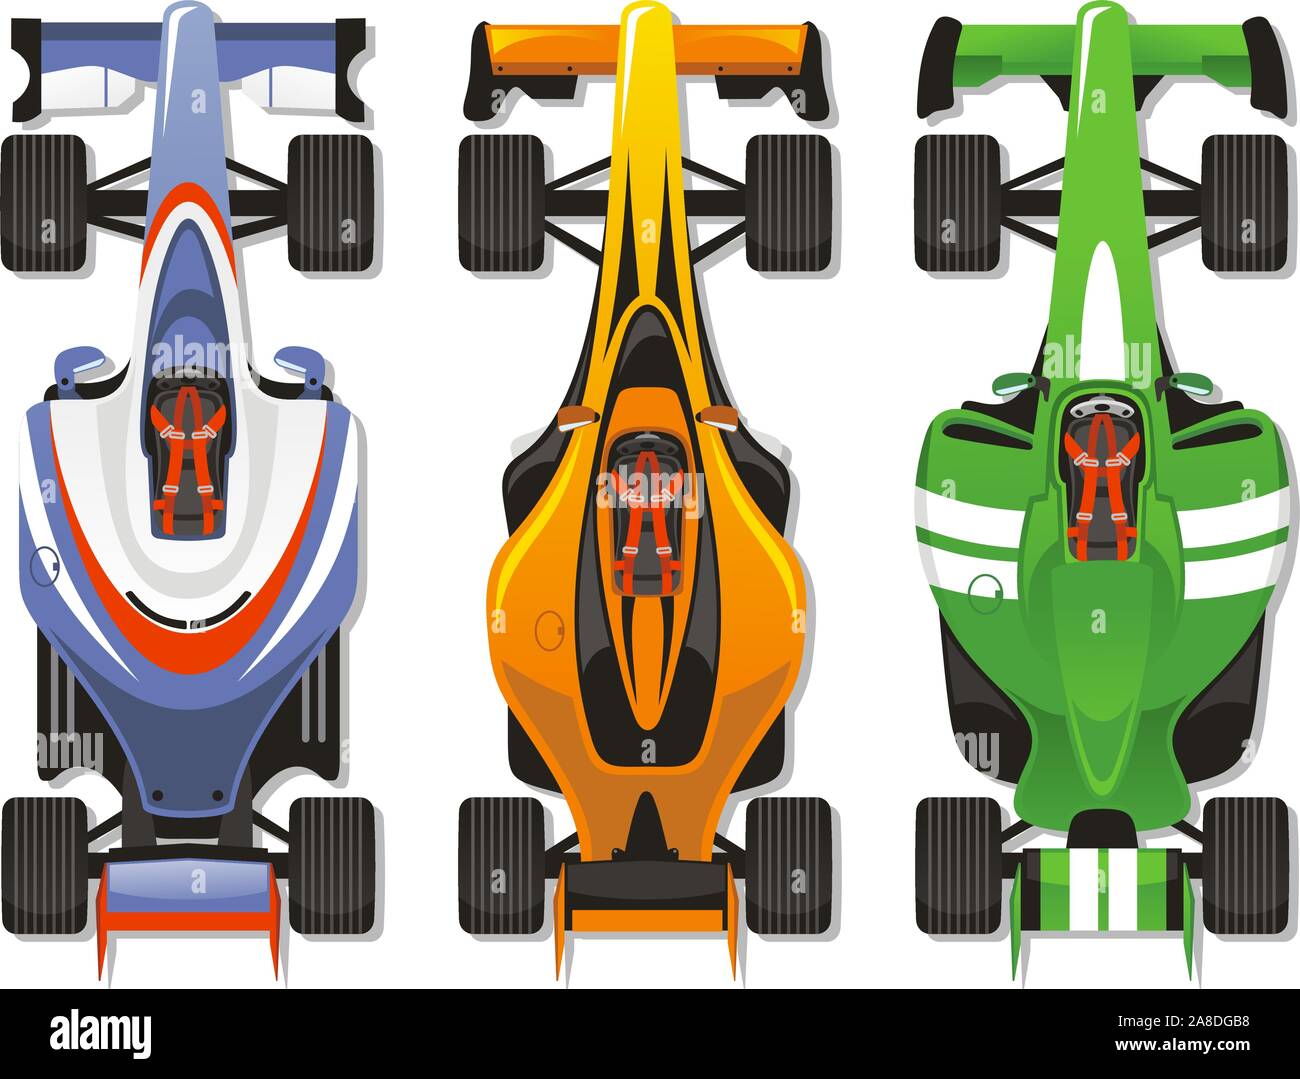 Sports car racing illustration Stock Vector